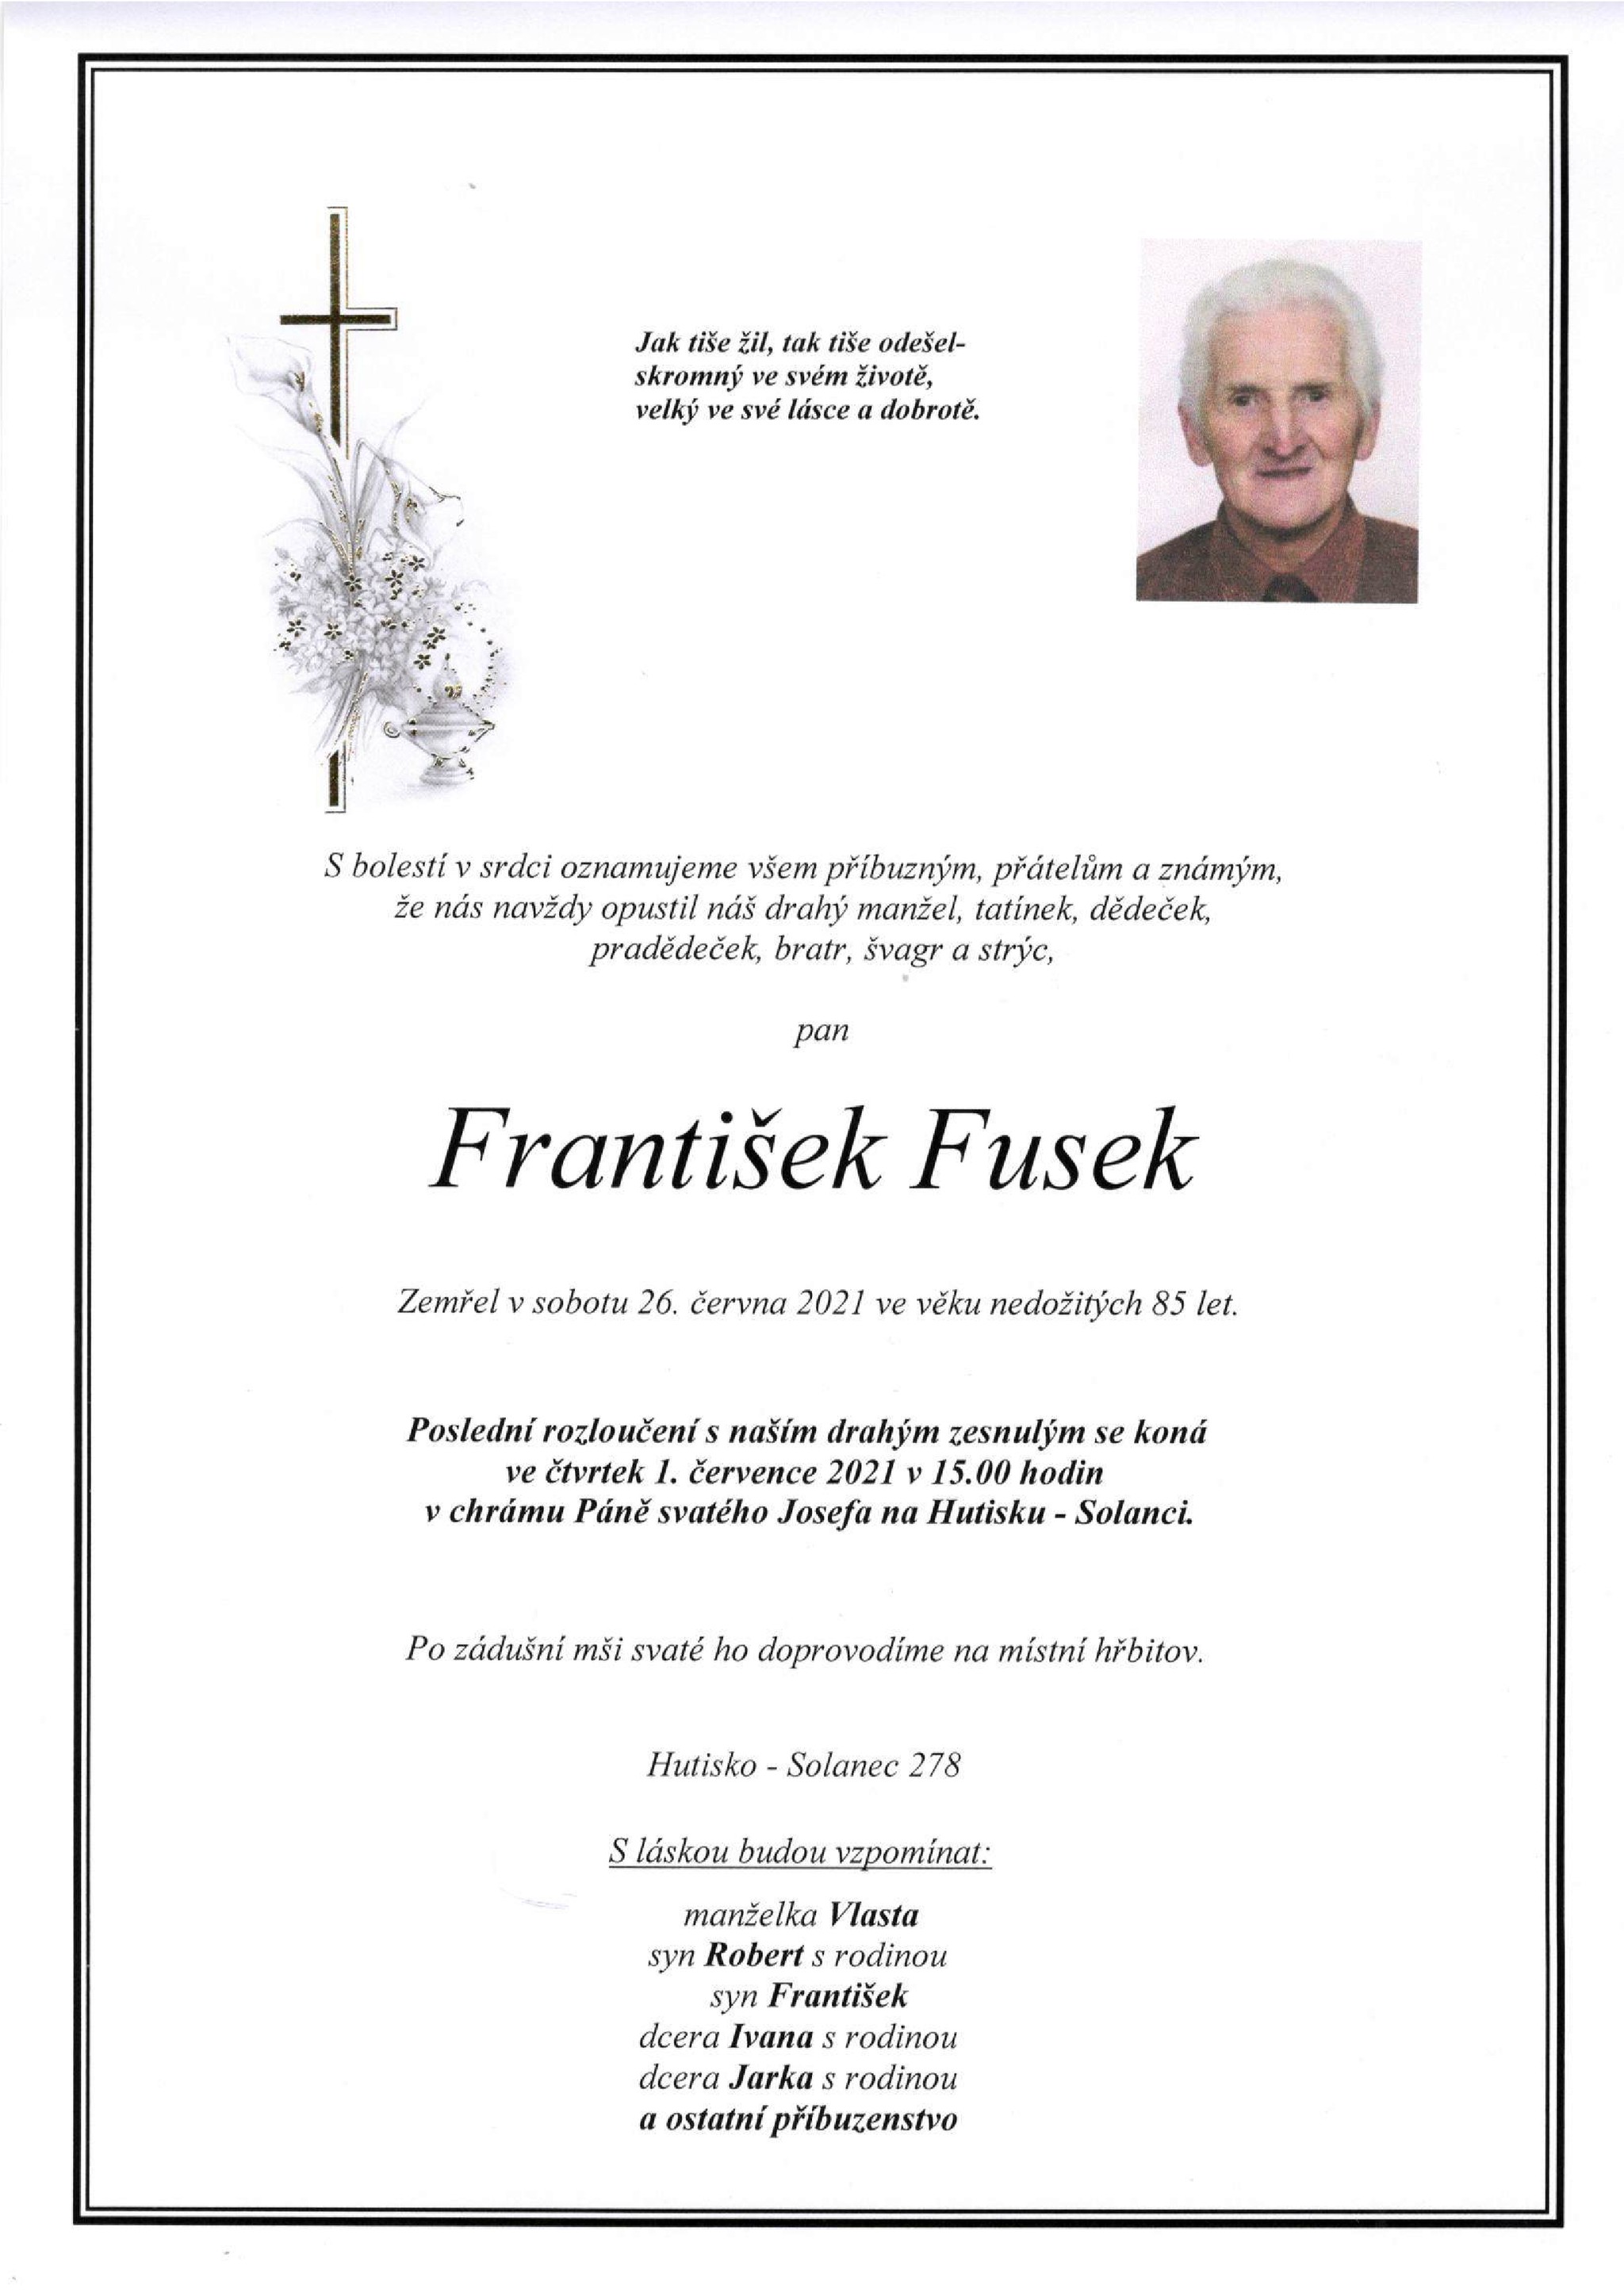 František Fusek